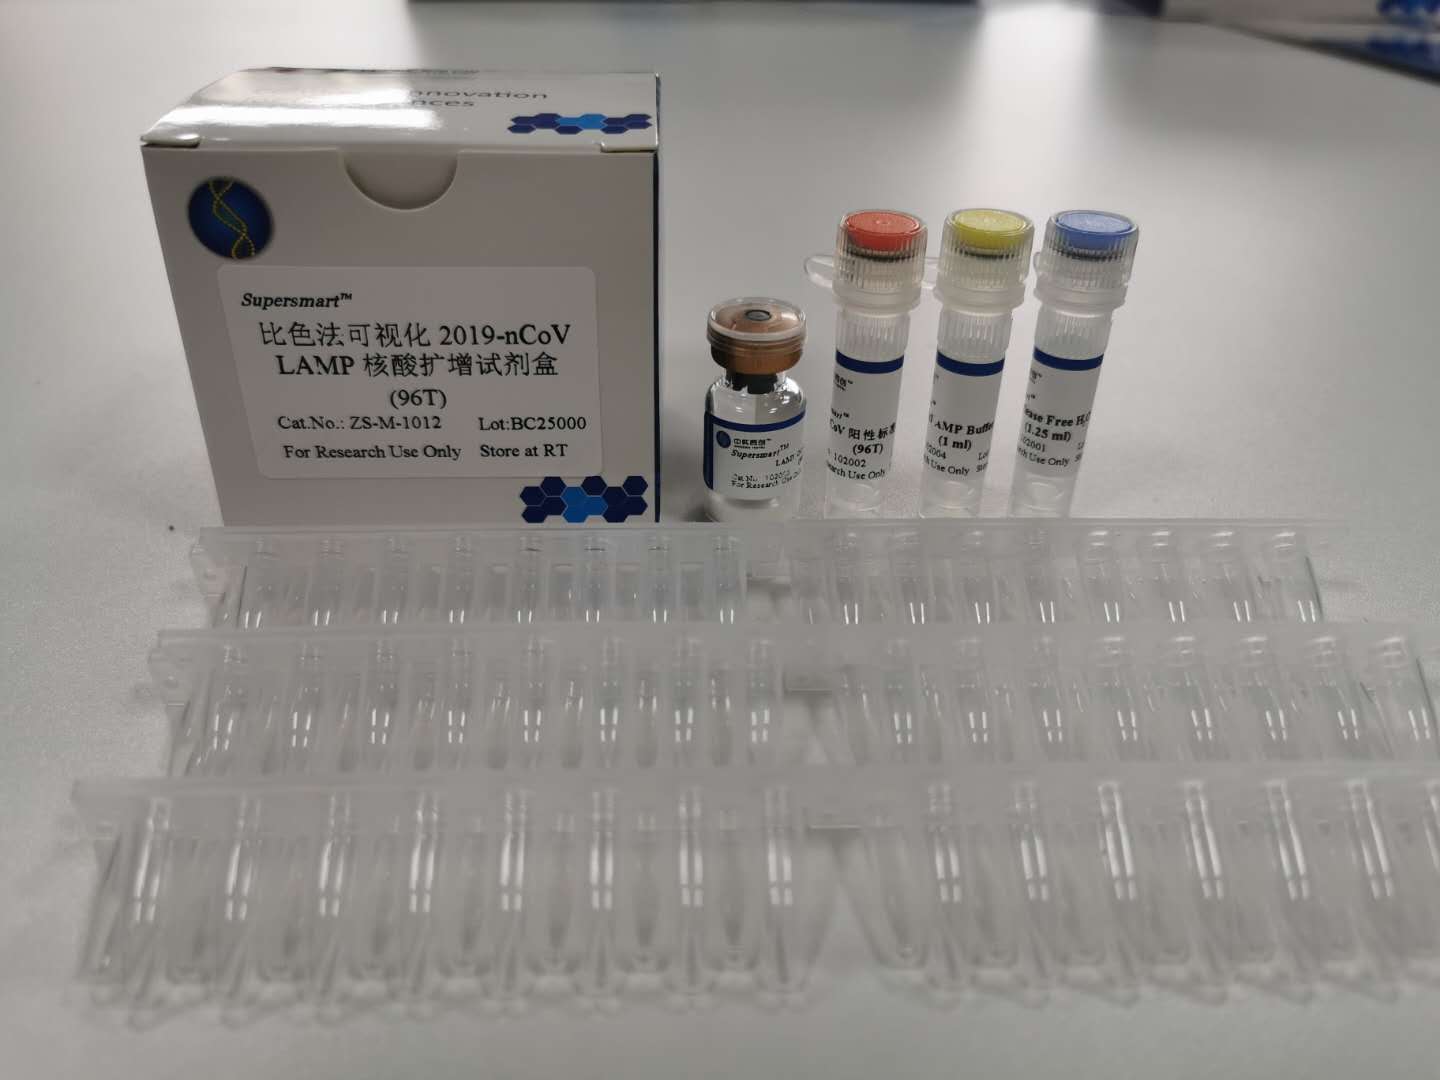  Supersmart 比色法可视化 2019-nCoV LAMP 核酸扩增试剂盒 (ZS-M17011)